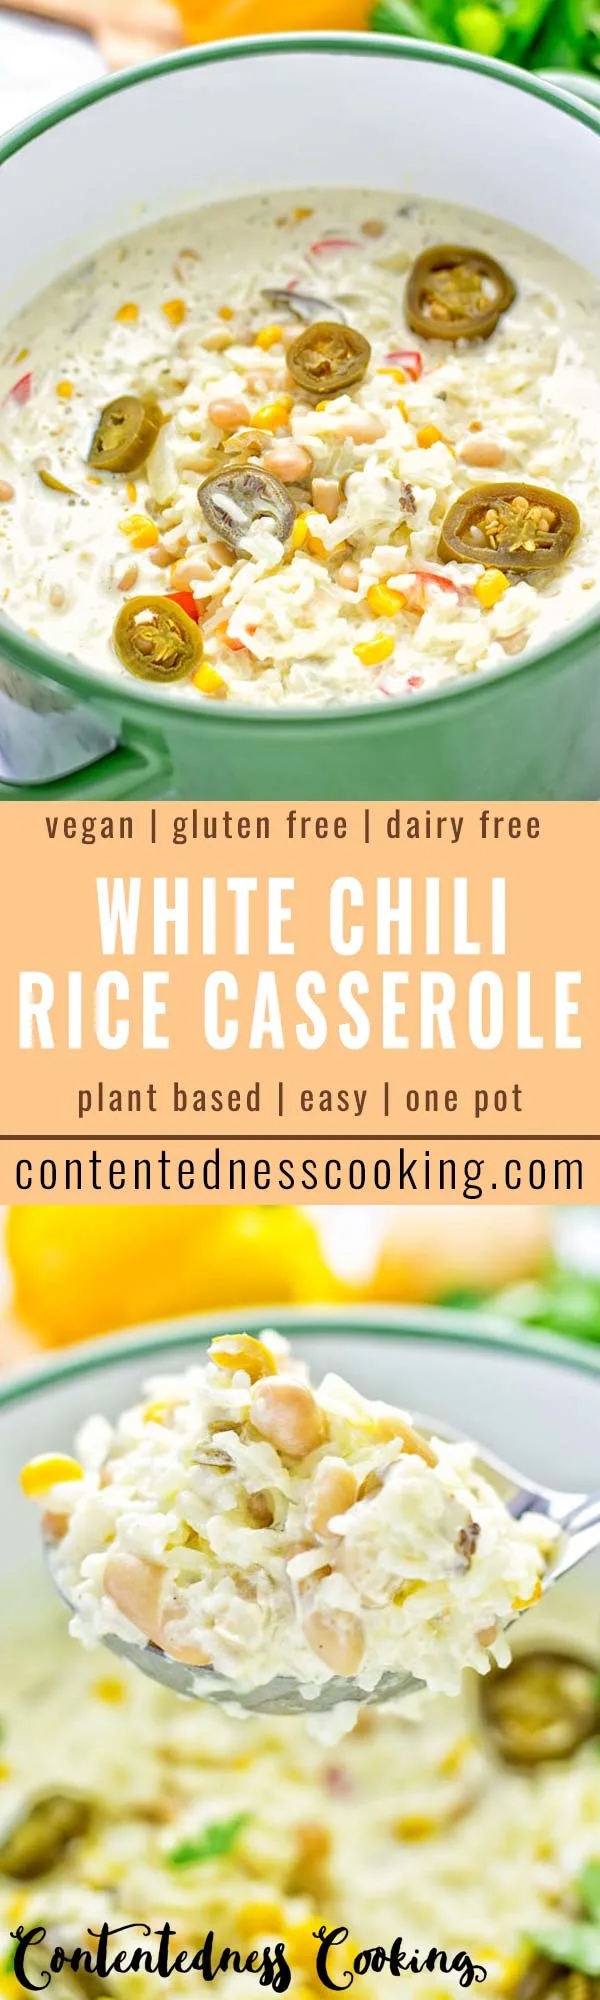 White Chili Rice Casserole | #vegan #glutenfree #contentednesscooking